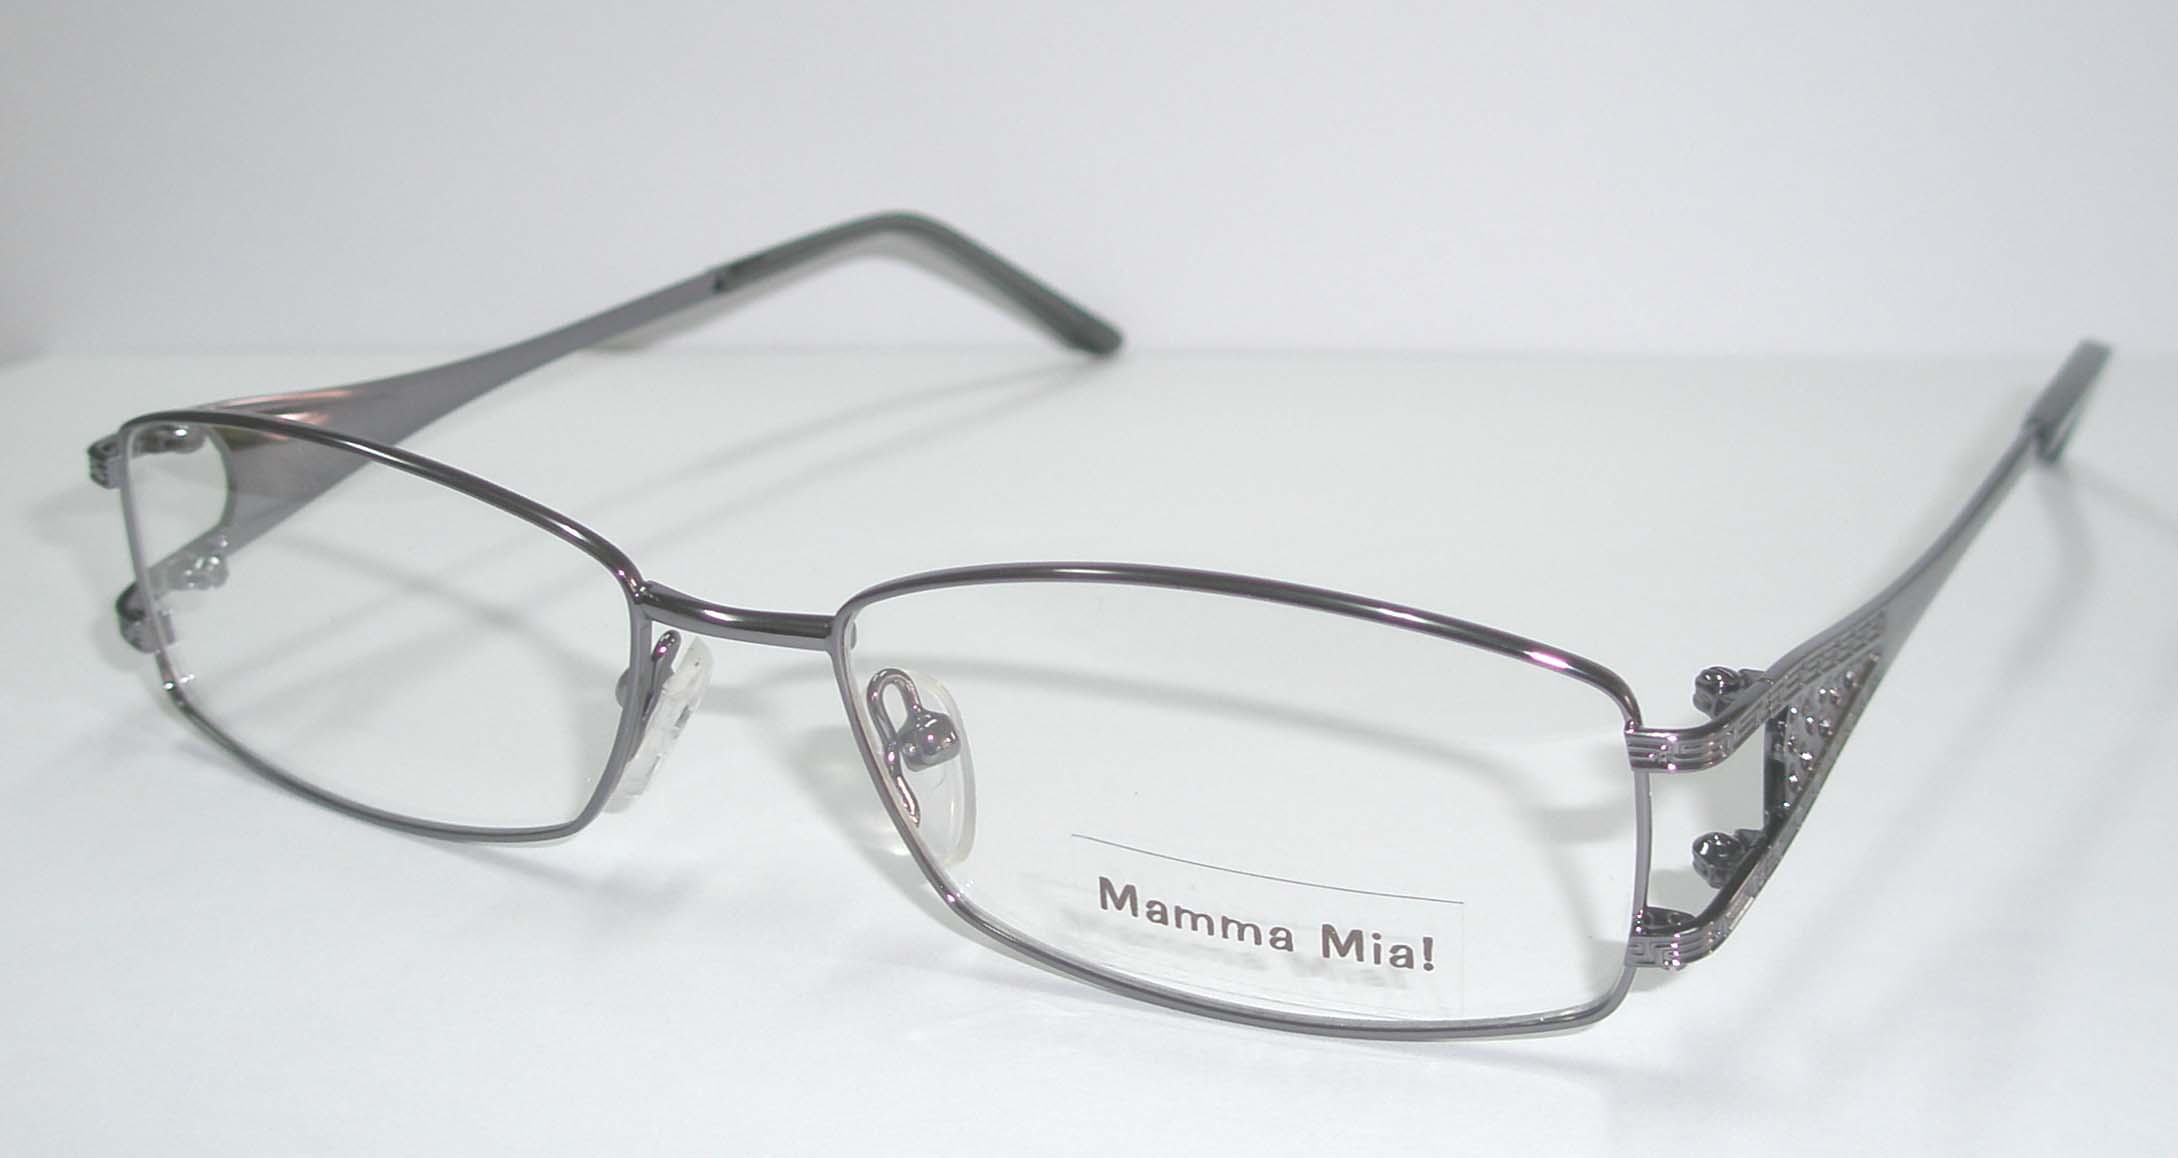  Eyewear Metal Optical Frame (Lunettes optiques Metal Frame)